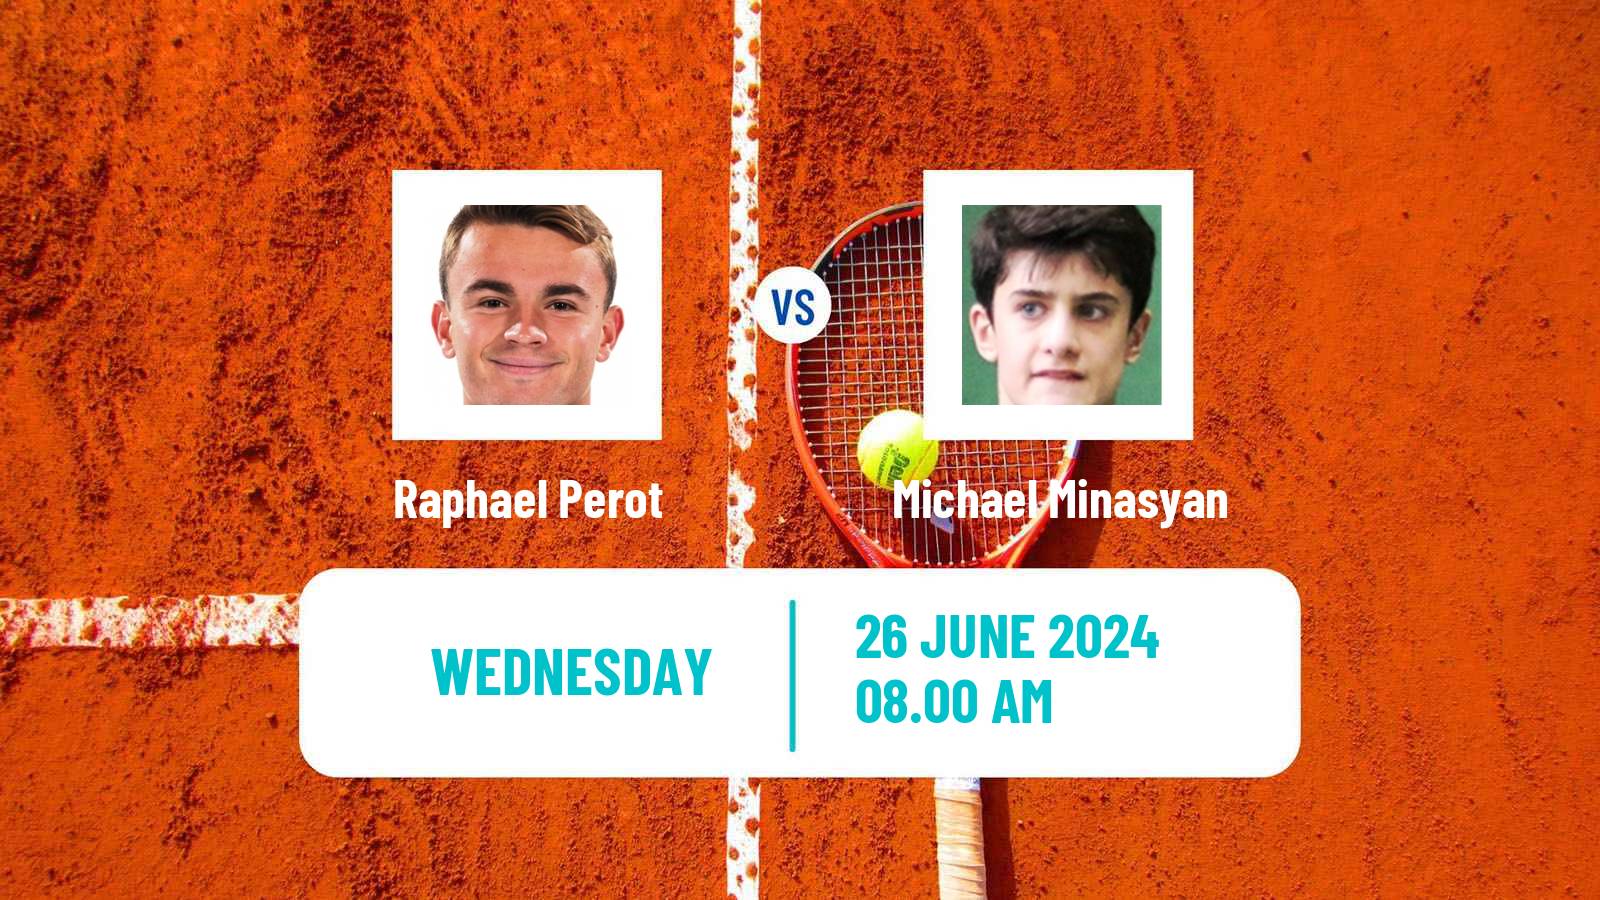 Tennis ITF M25 Brussels Men Raphael Perot - Michael Minasyan